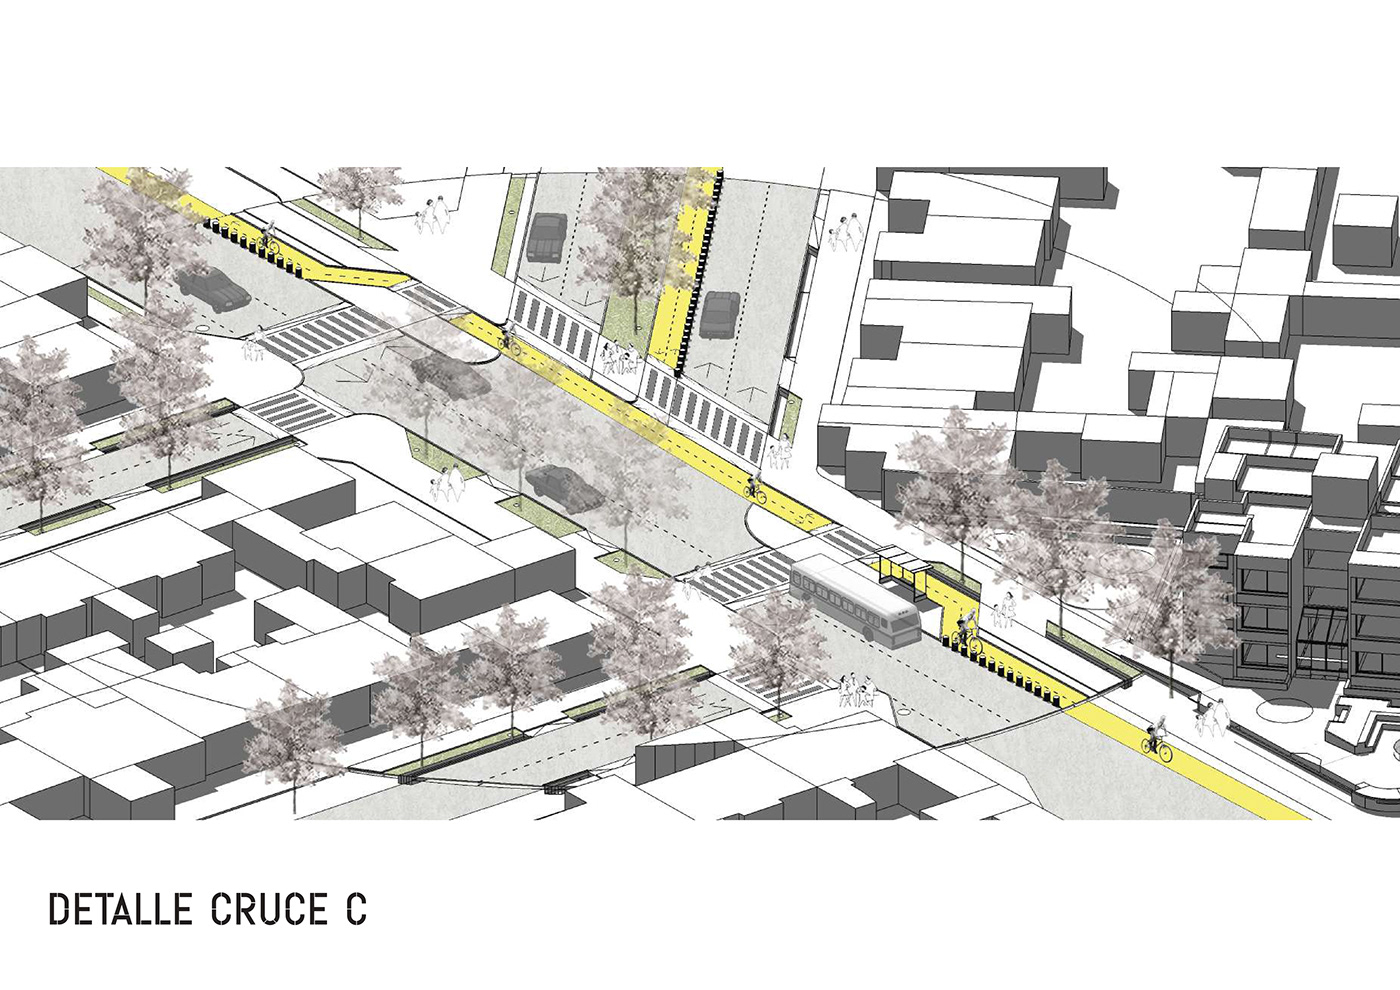 text adobe illustrator Adobe Photoshop Autocad 2D SketchUP Urban Design Urban research